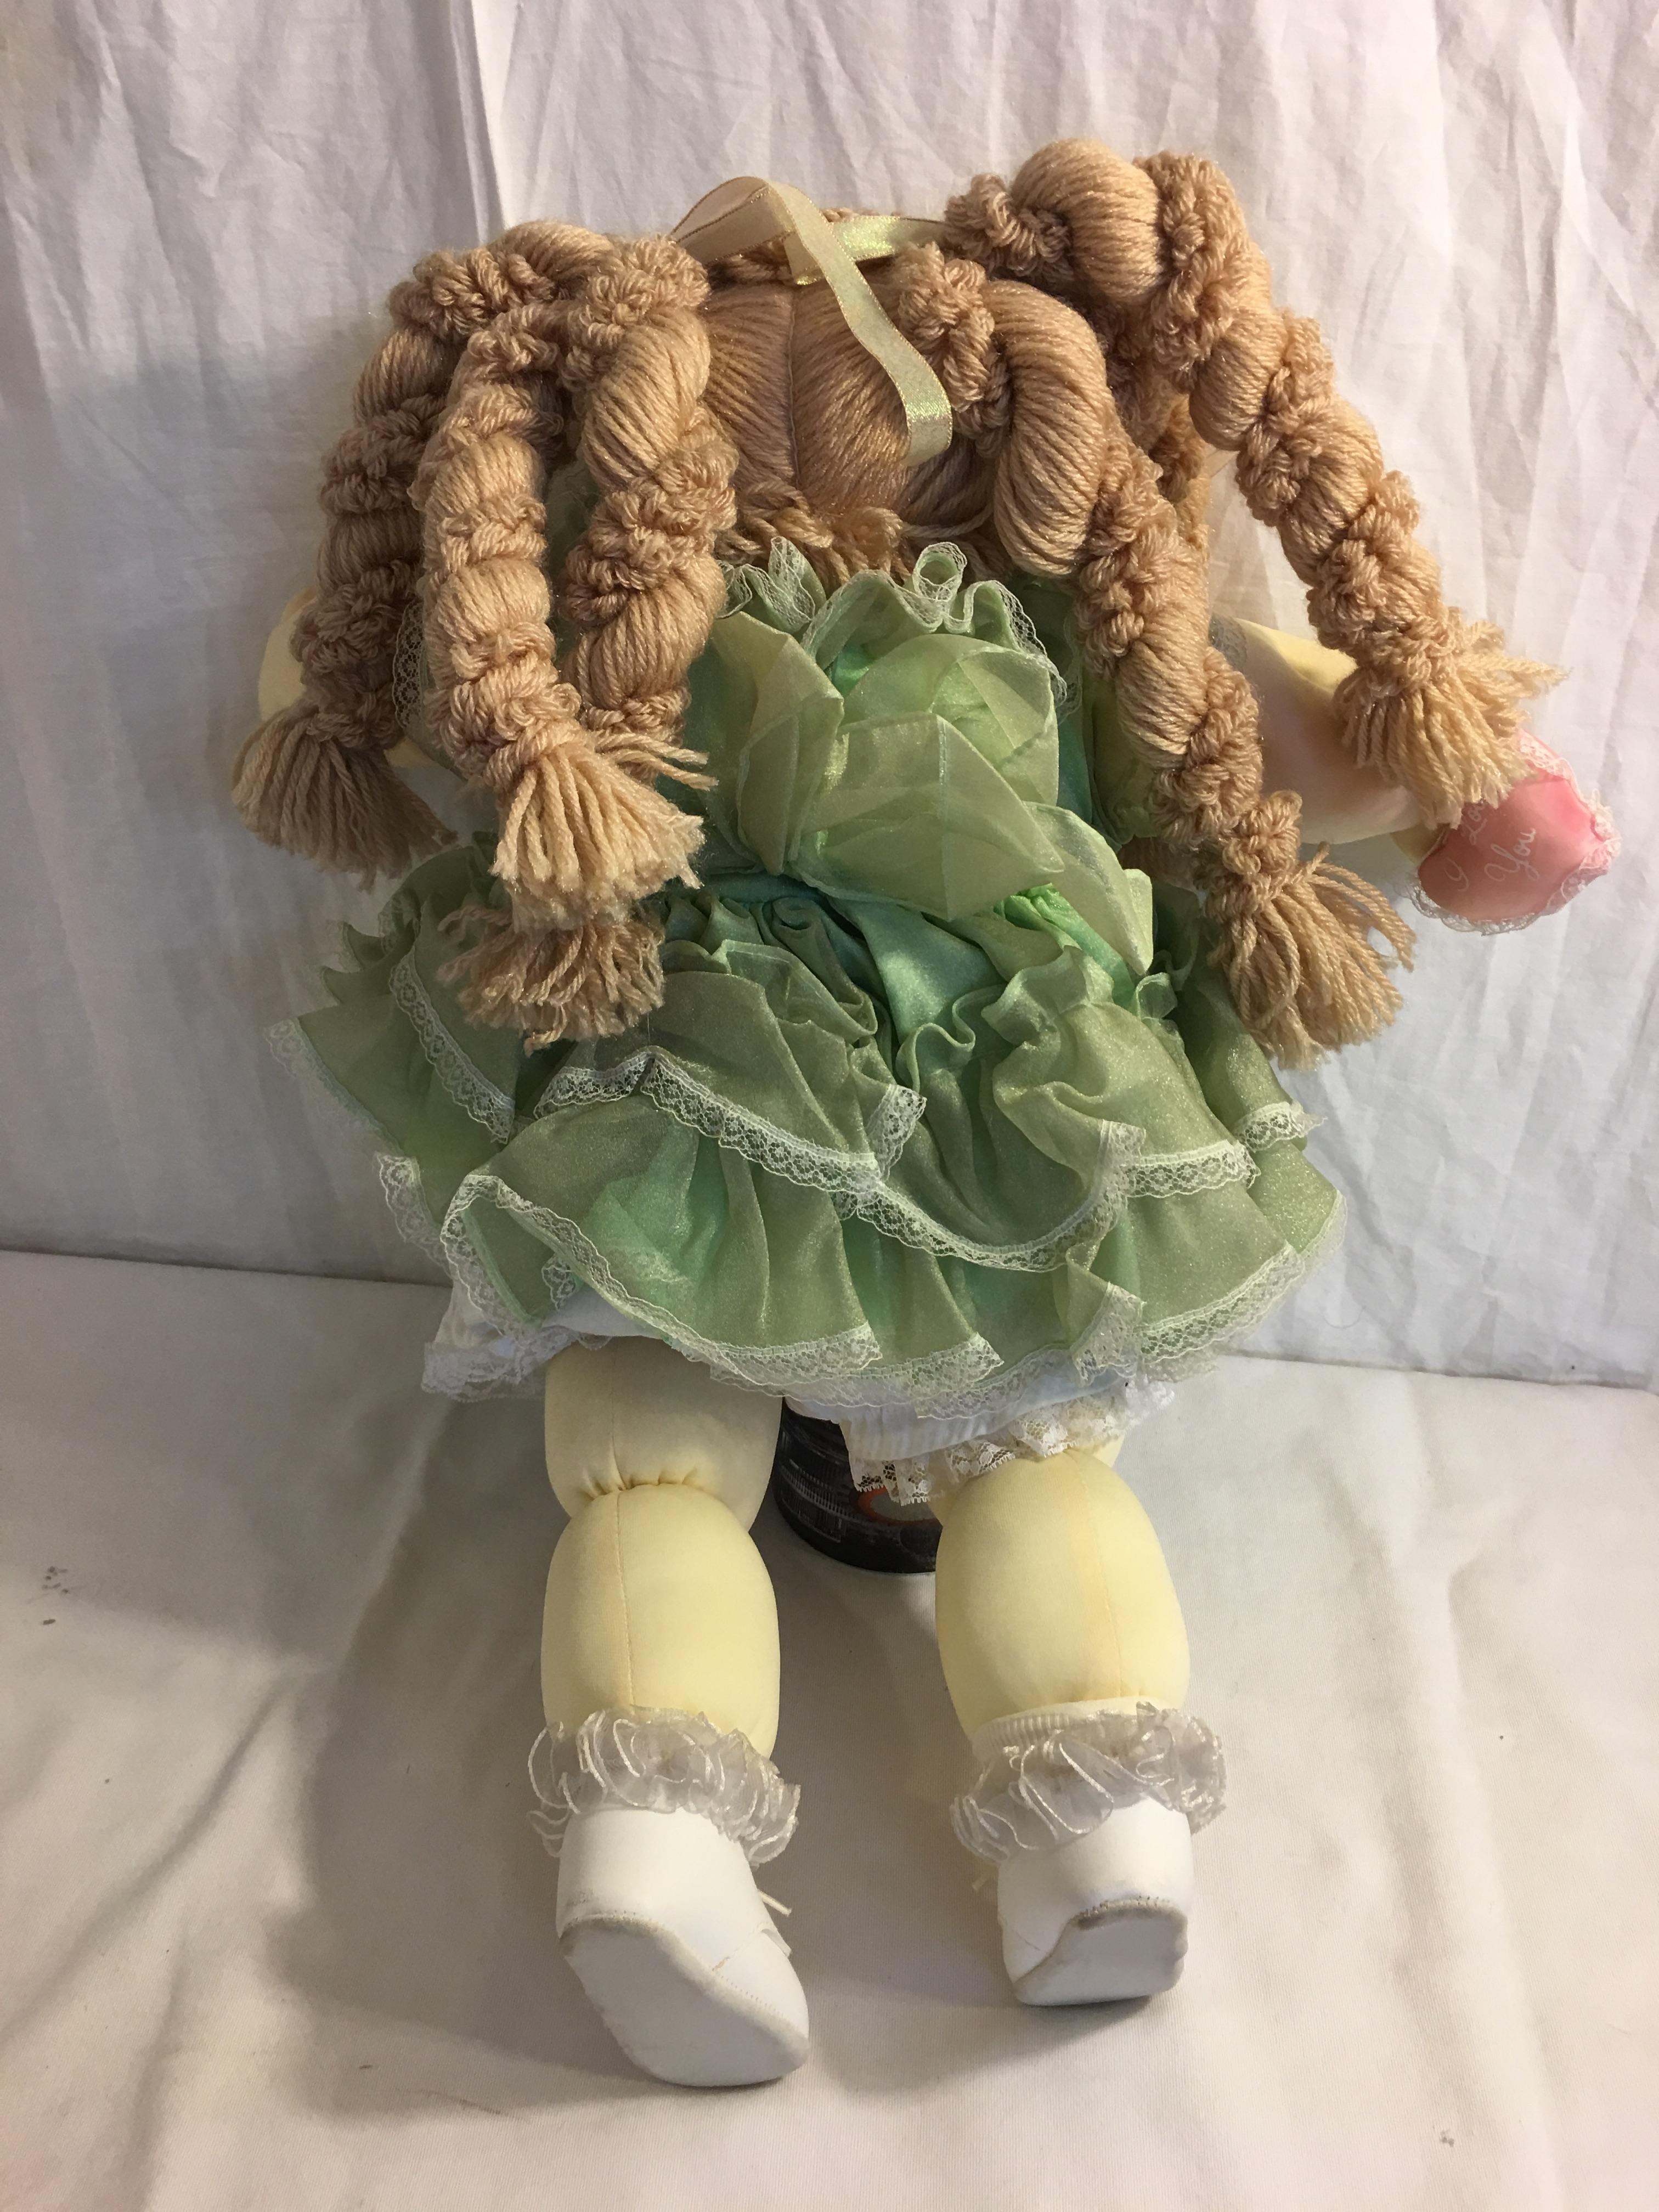 Collector Loose Vintage 1987 Original Cabbage Patch Kids " Genea Valentina" Doll Size:24"Tall